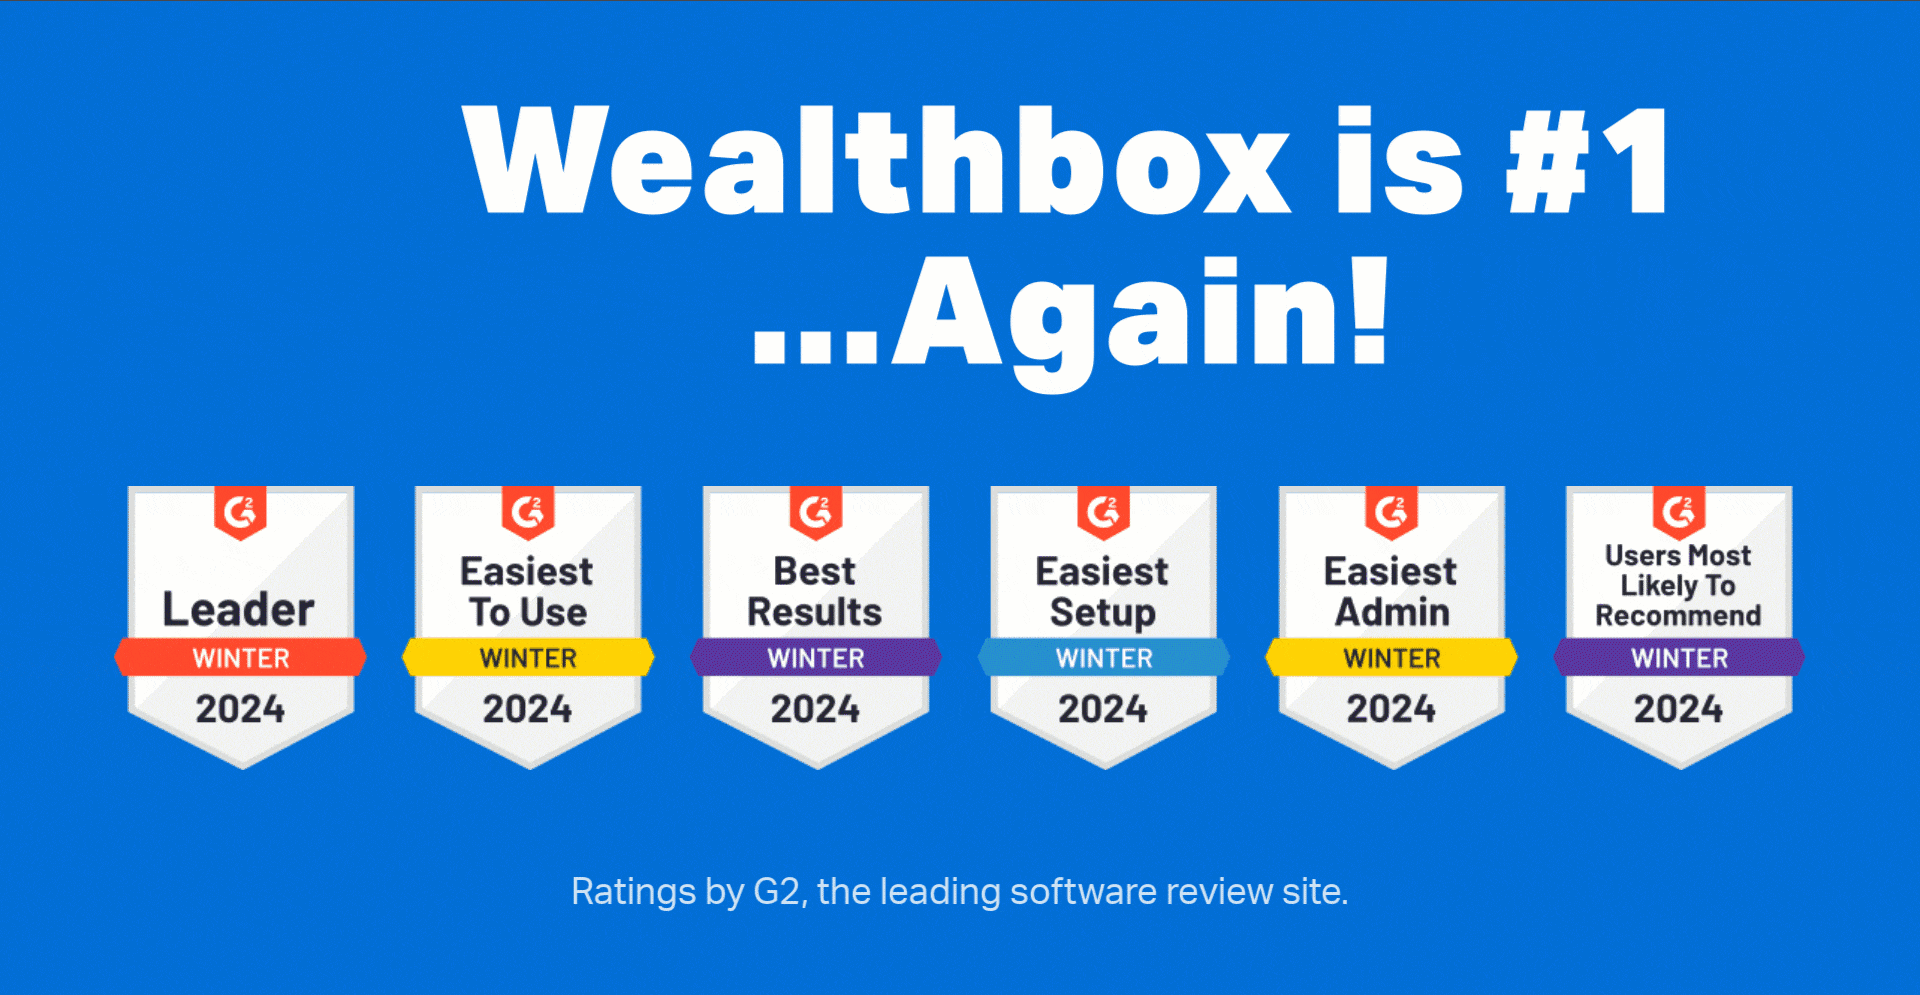 Wealthbox is #1... again!